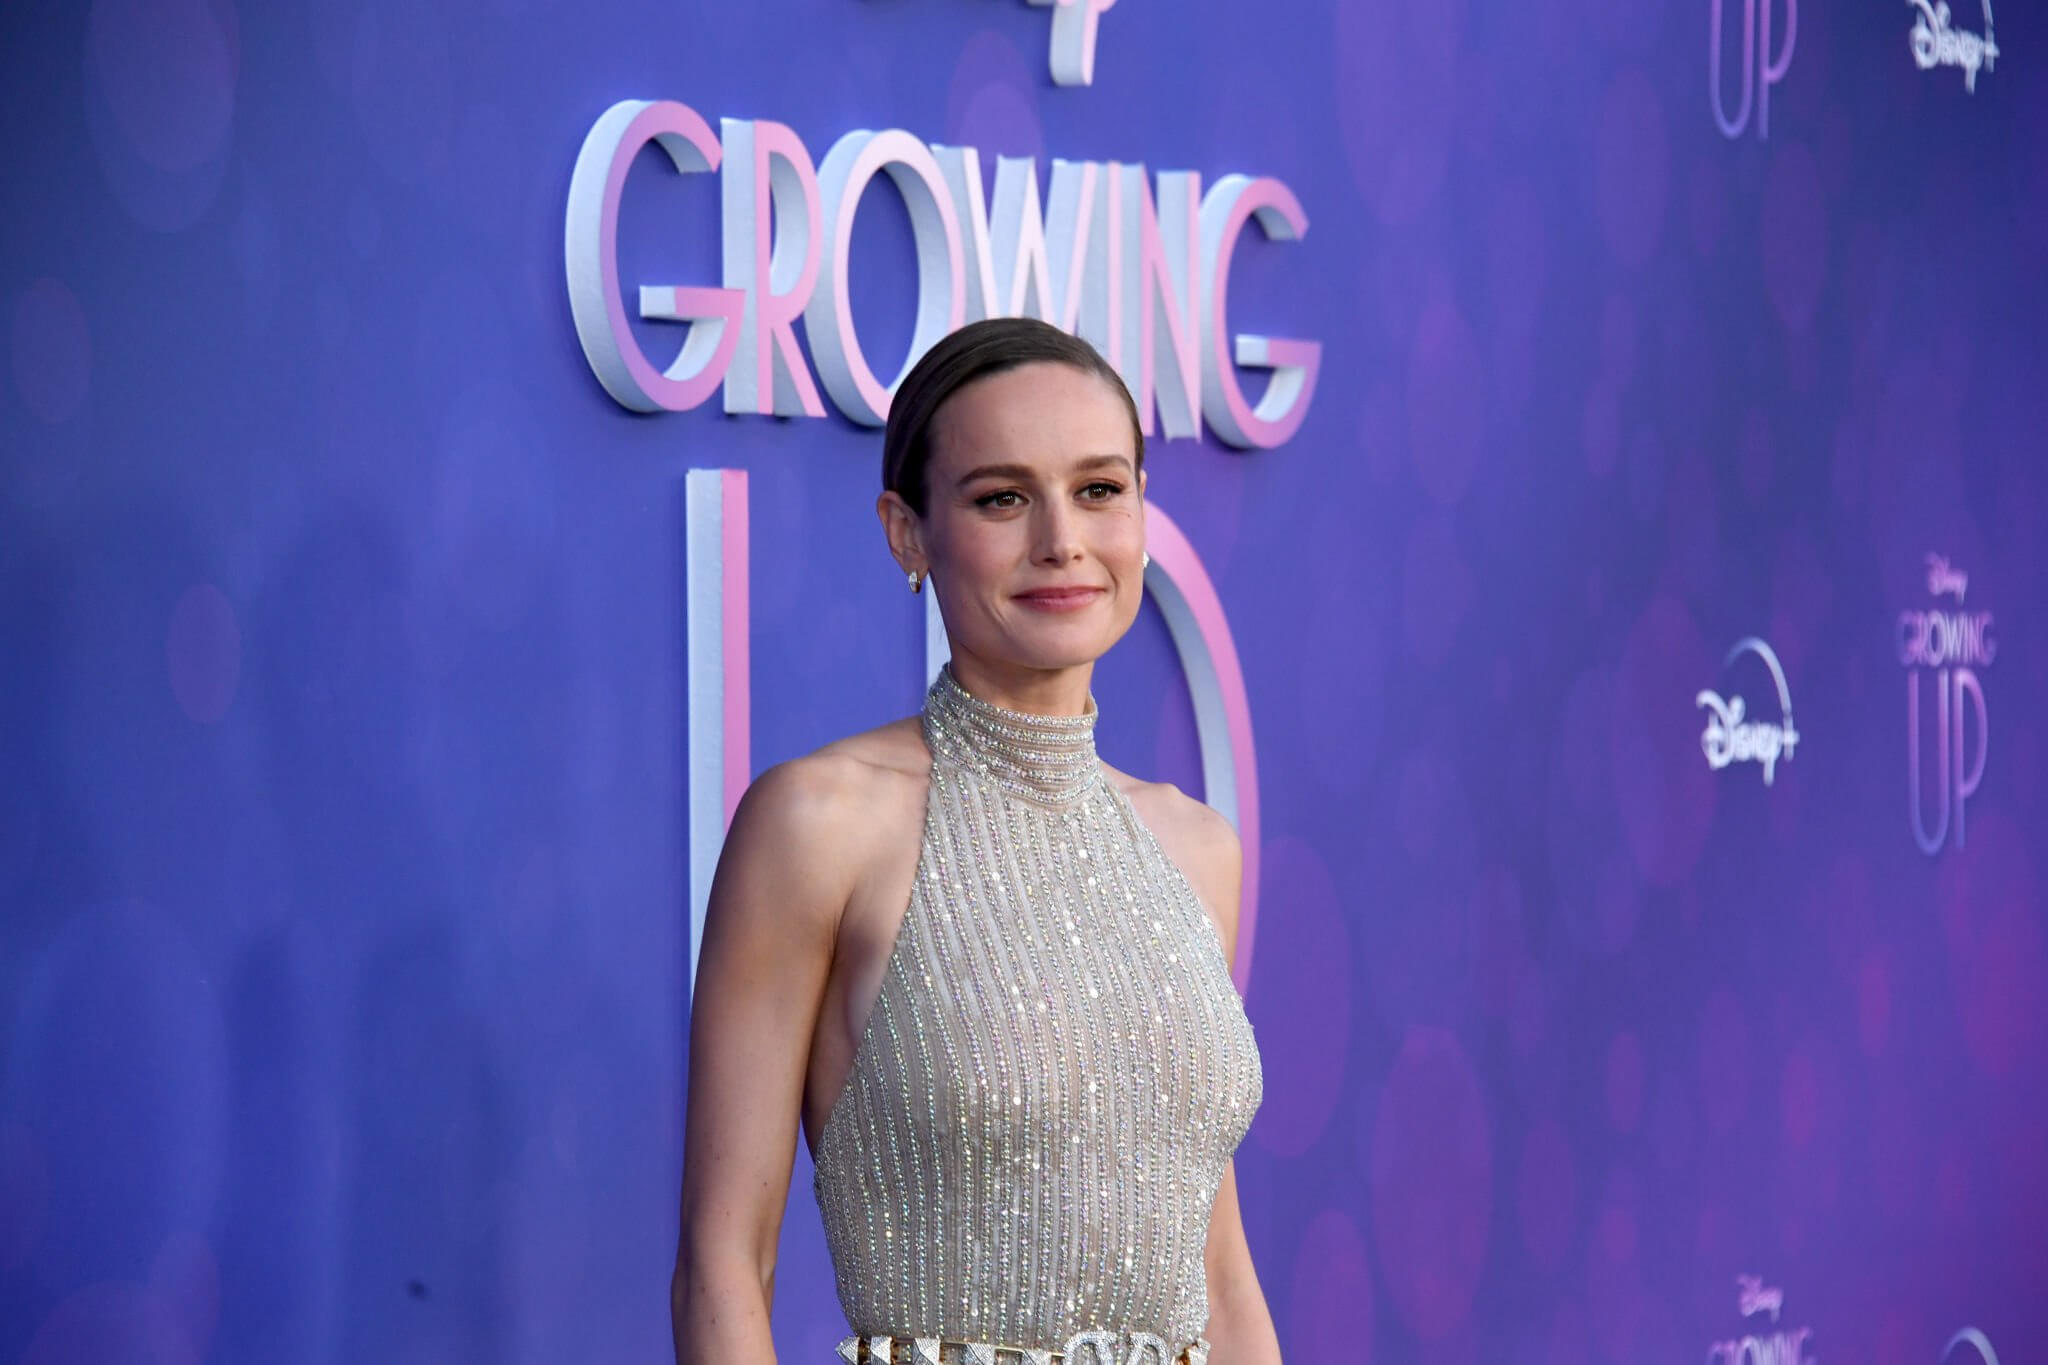 Brie Larson - Disney+'s "Growing Up" Red Carpet Premiere Event